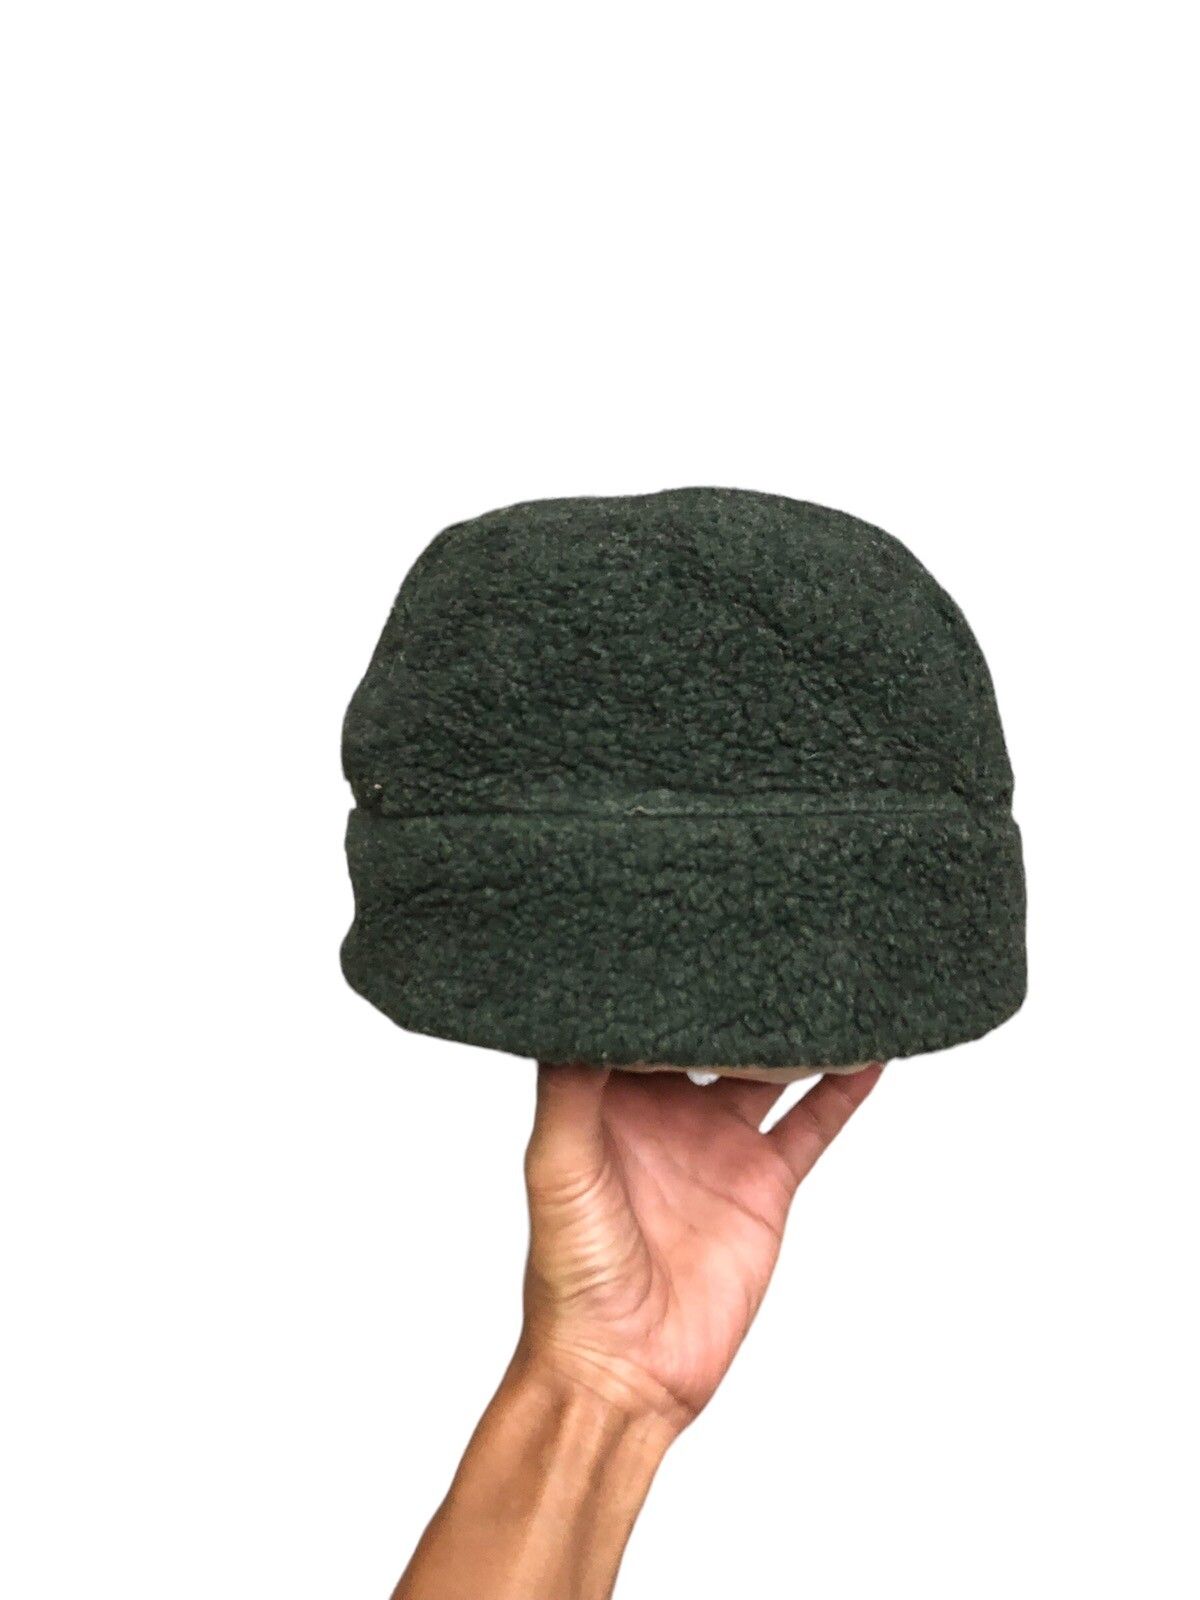 The North Face Horizon Hat S/M Black Ripstop Cap